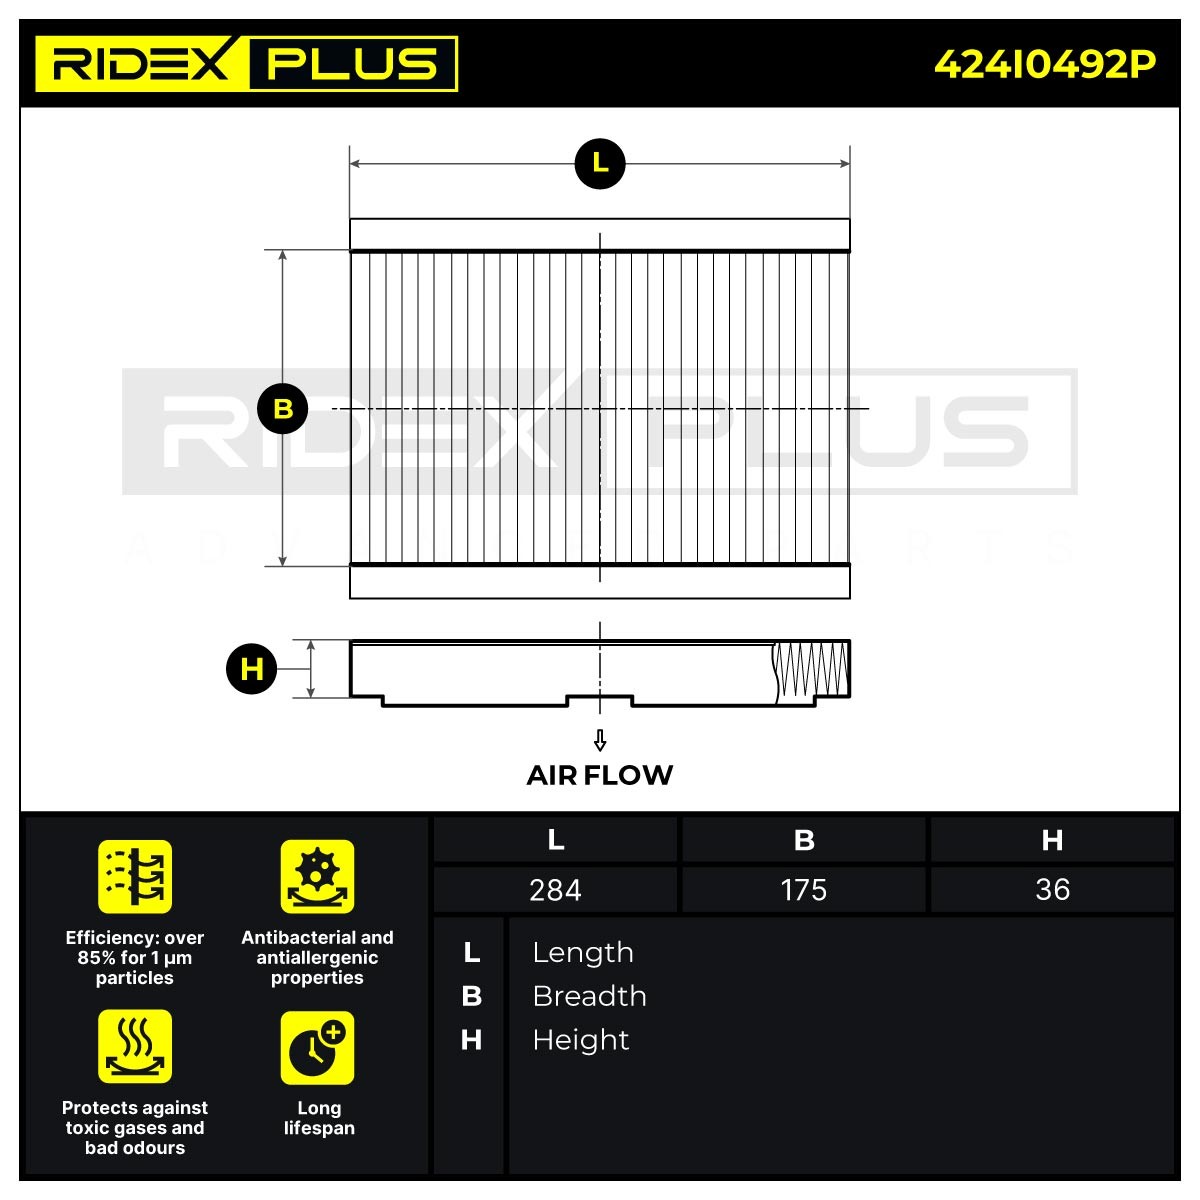 RIDEX PLUS Cabin air filter 424I0492P buy online